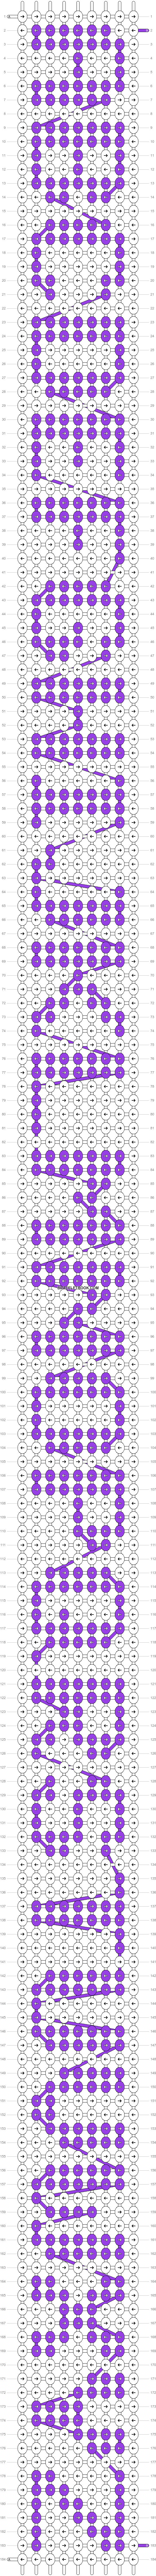 Alpha pattern #48601 variation #92542 pattern